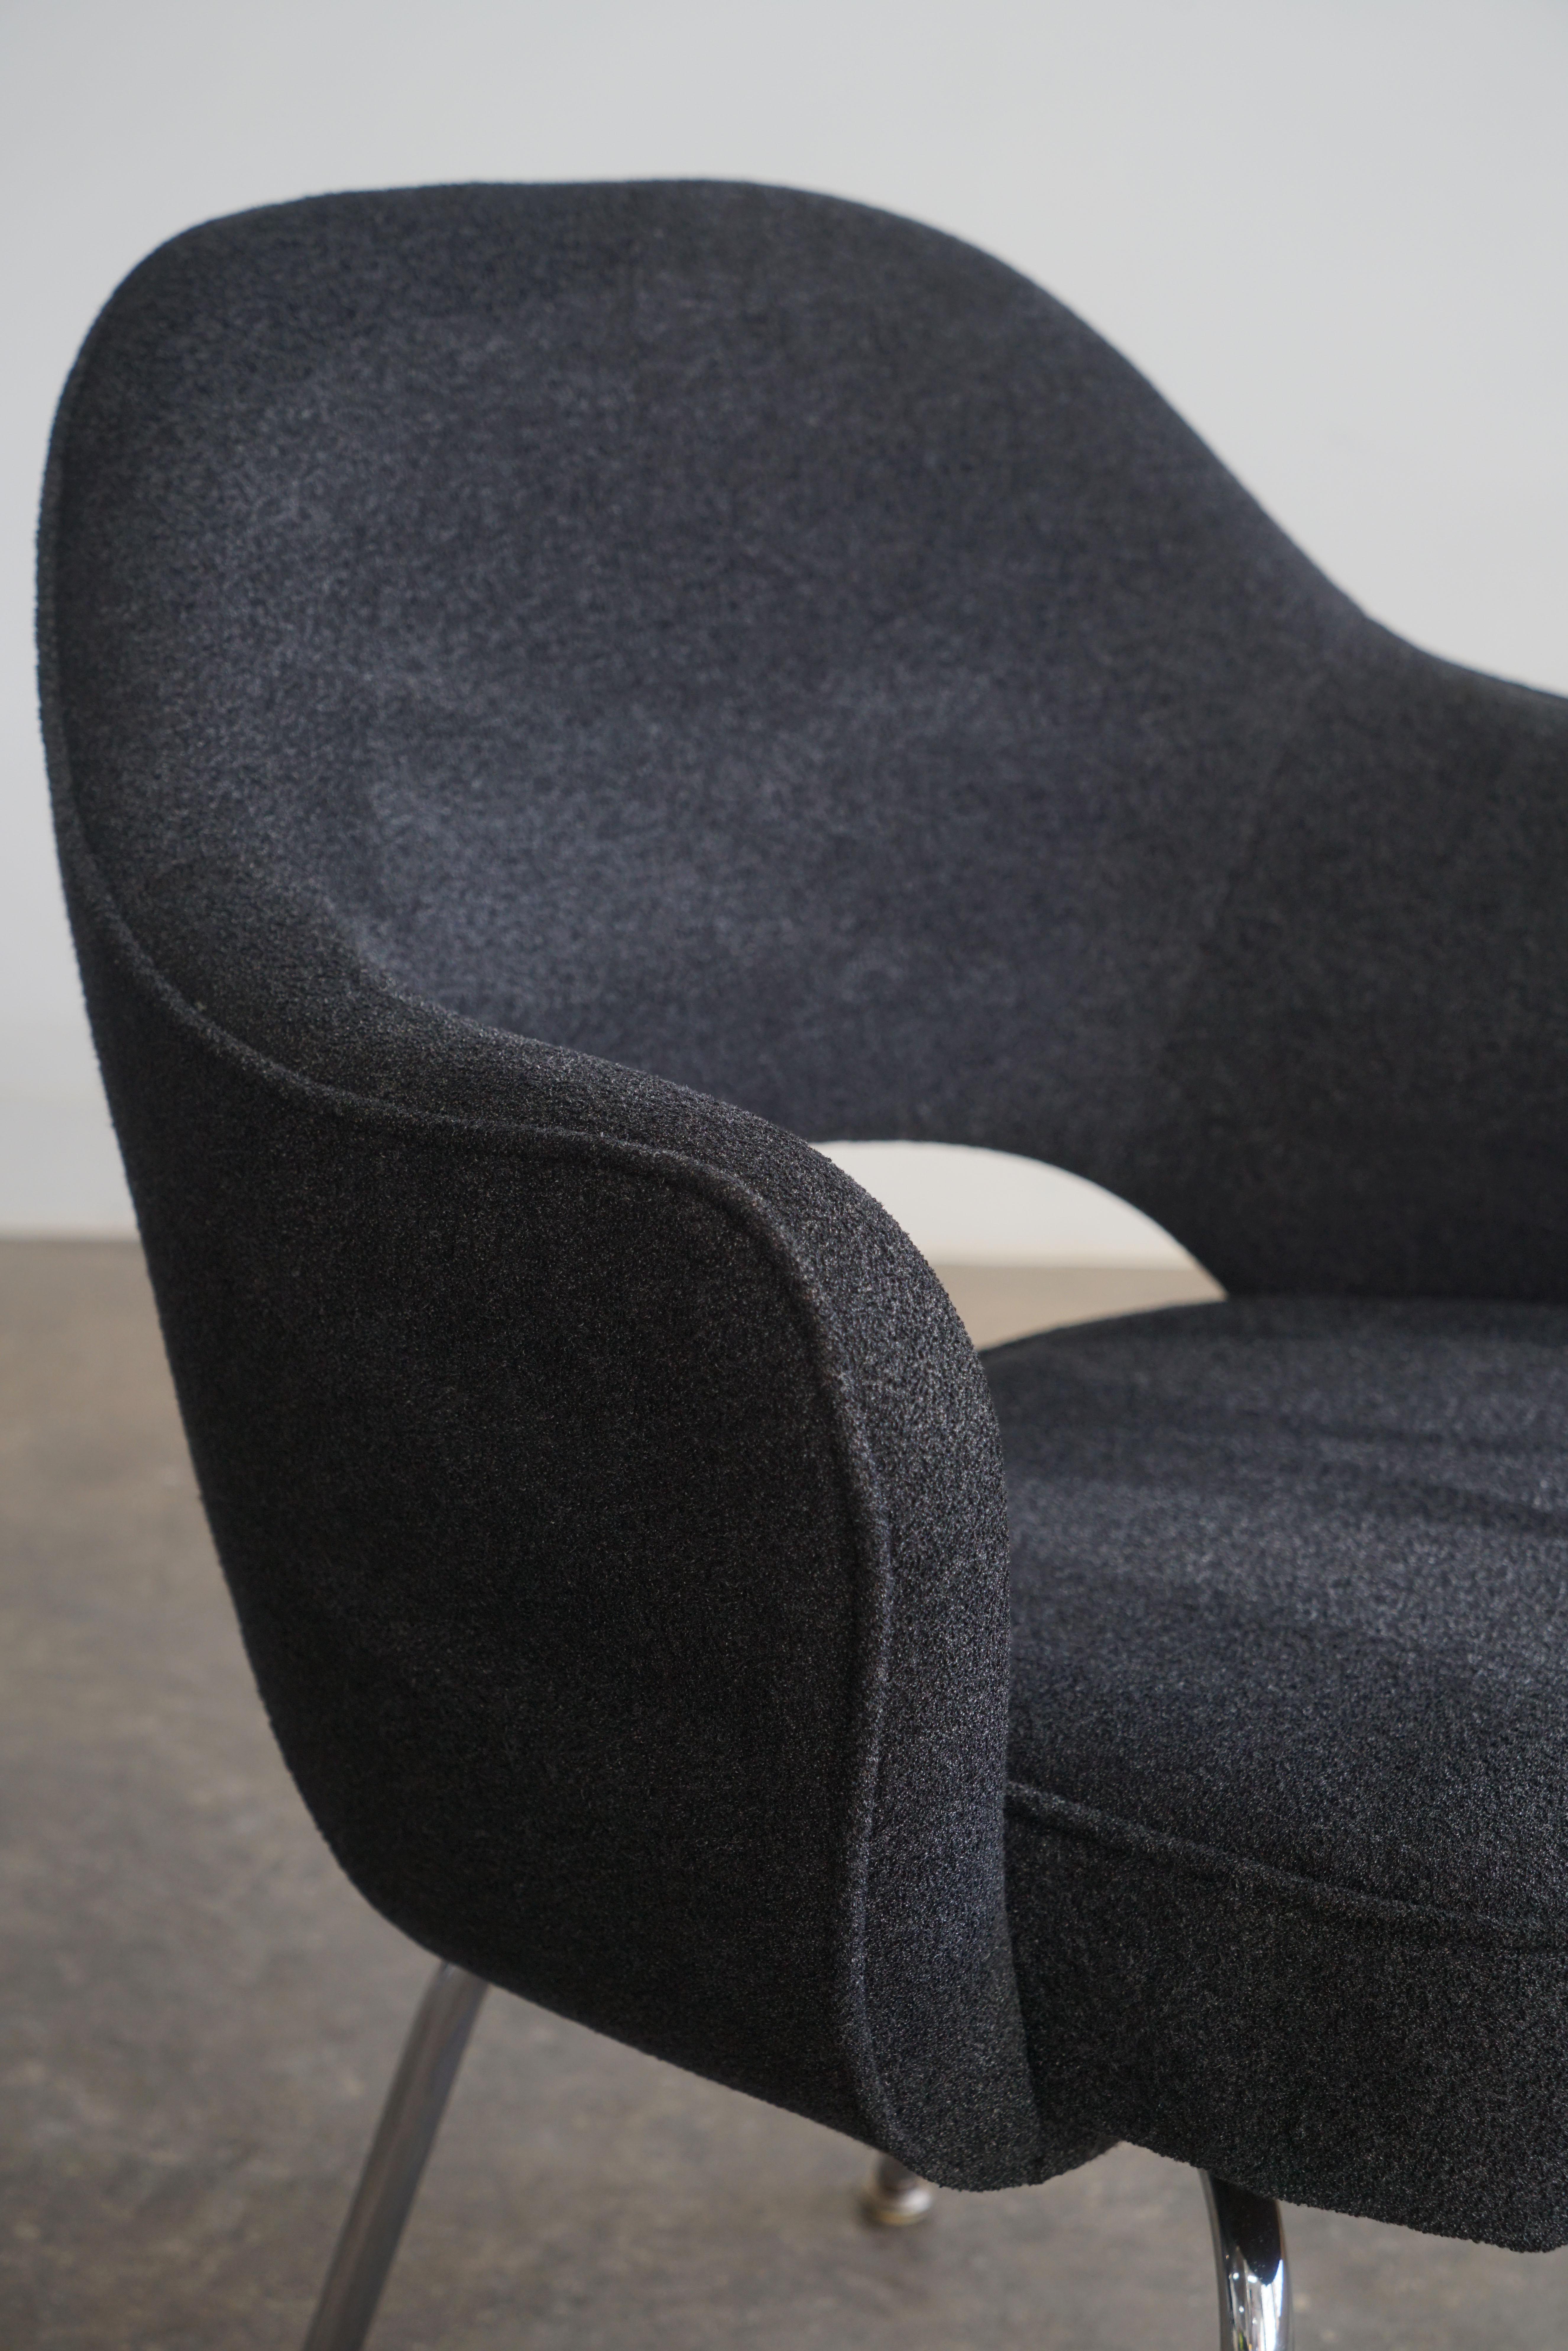 Chrome Pair of Knoll Eero Saarinen Executive Chairs, Armchair version black upholstery